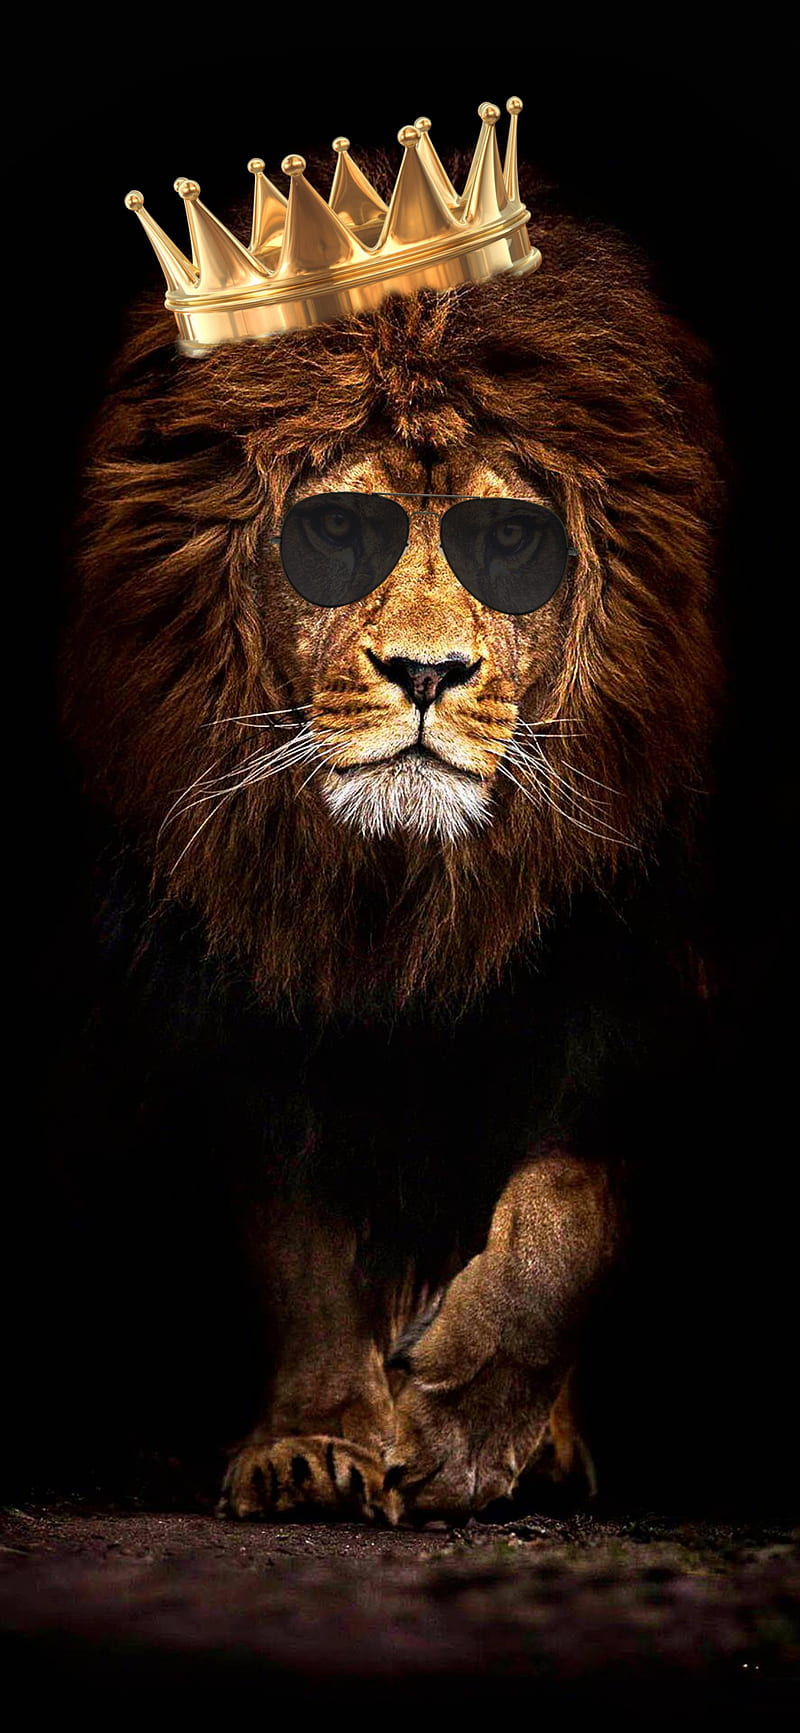 Lion Lioness Africa - Free photo on Pixabay - Pixabay